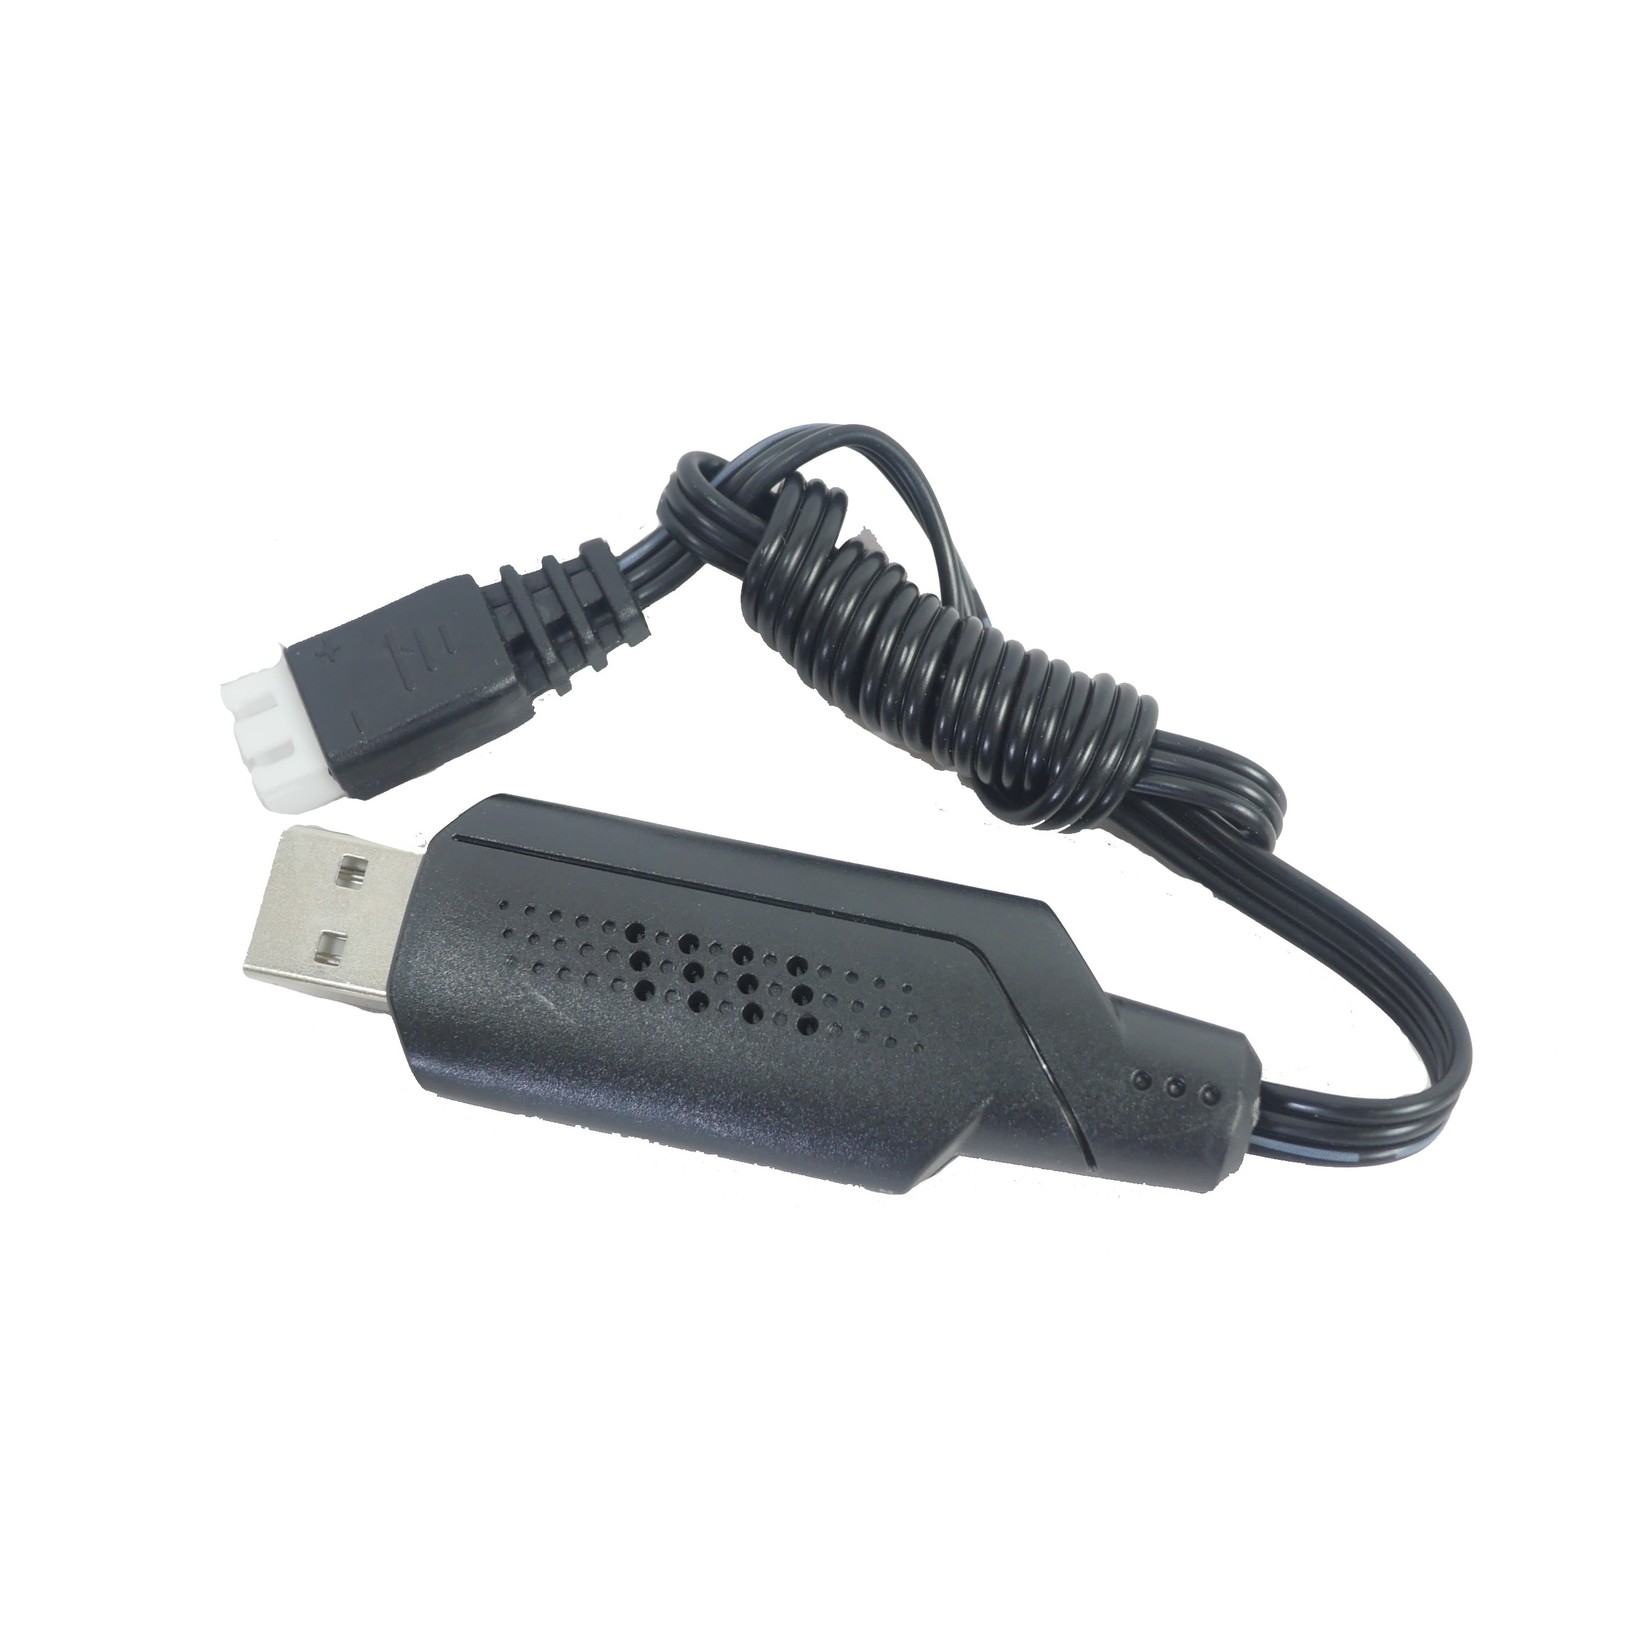 Blackzon USB Charger; Slyder